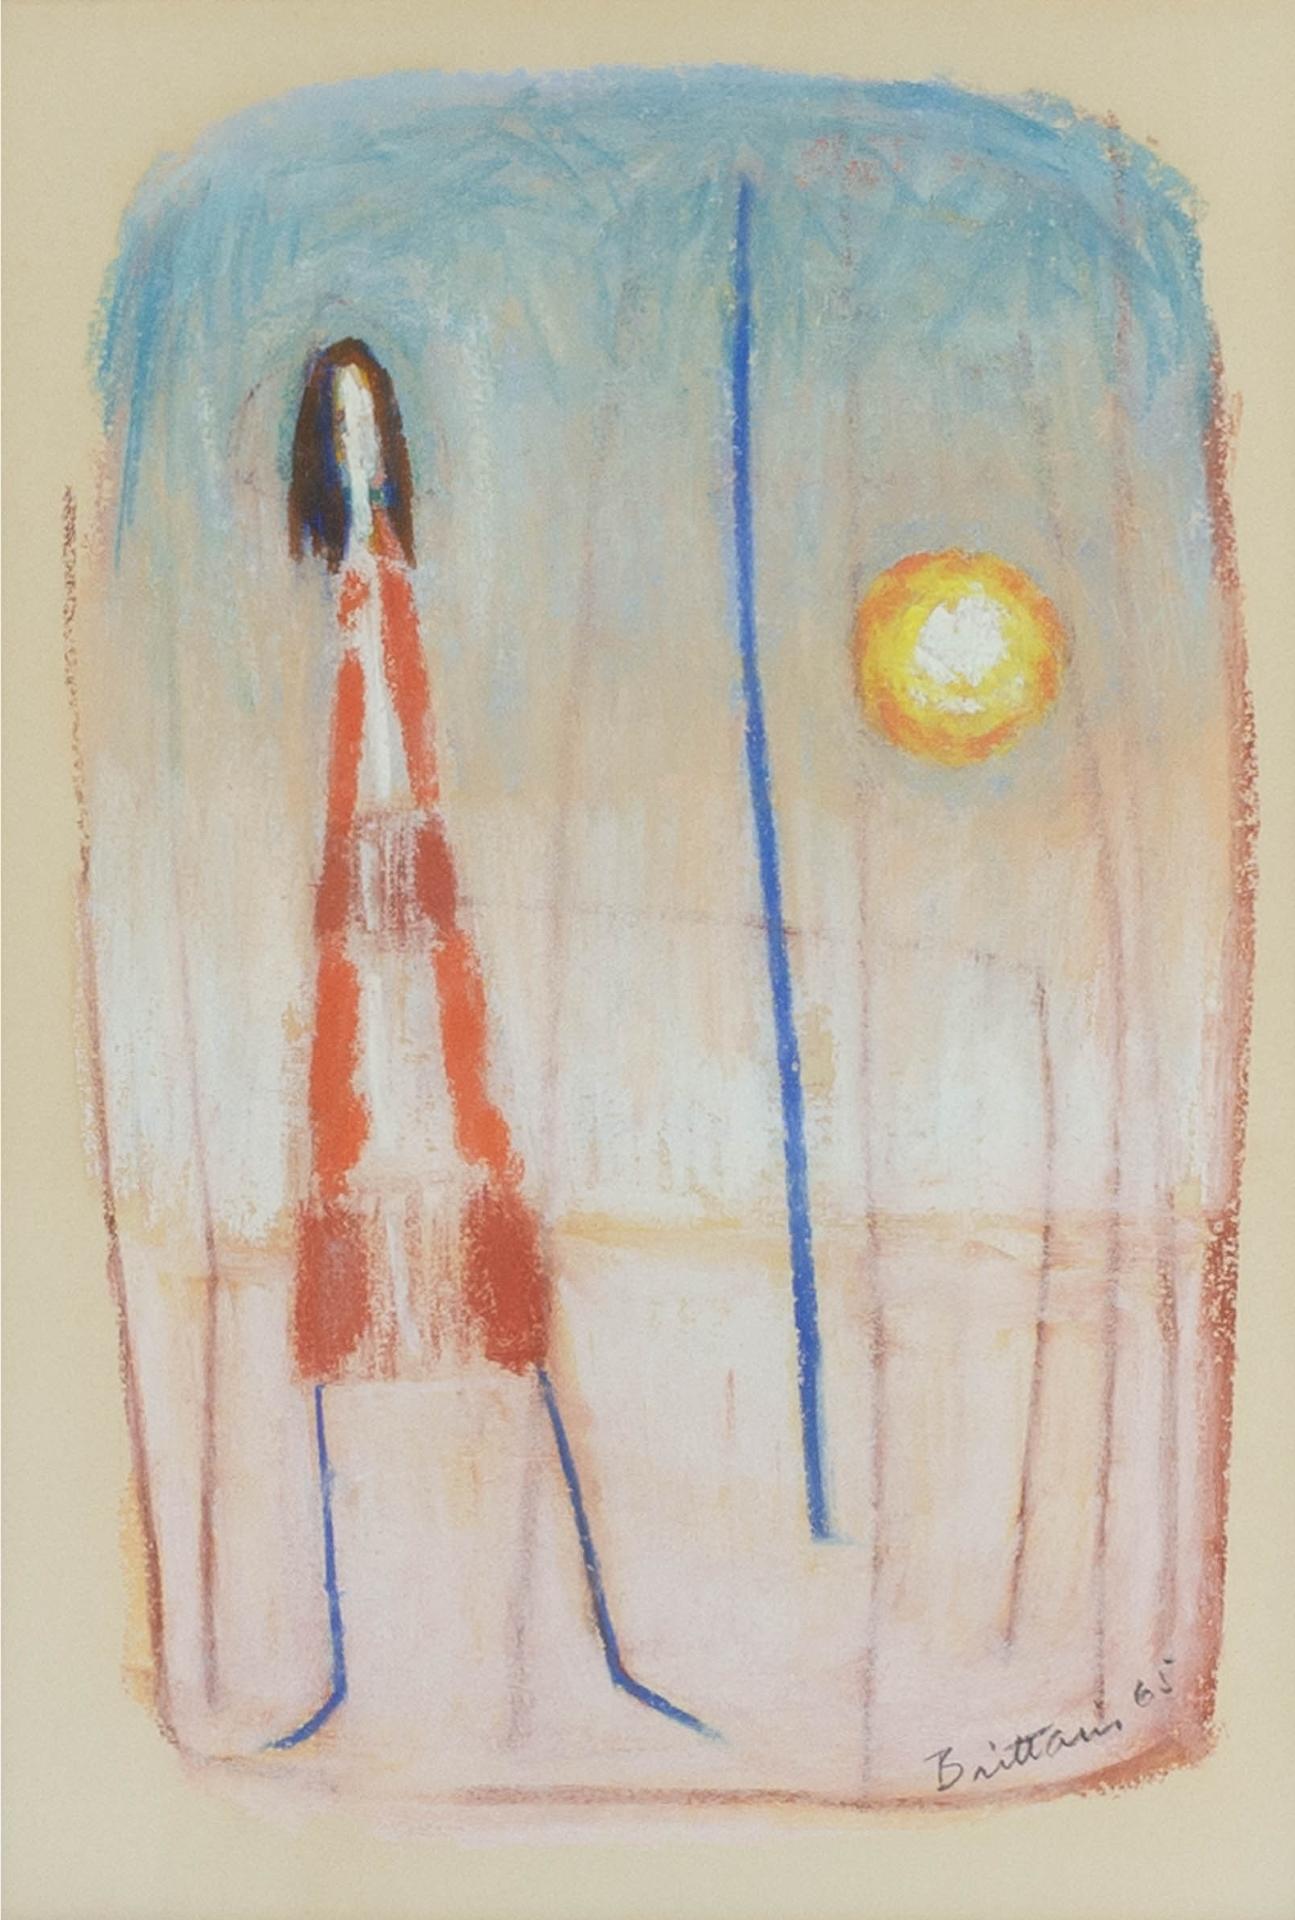 Miller Gore Brittain (1912-1968) - Figure In A Pink Field, 1965